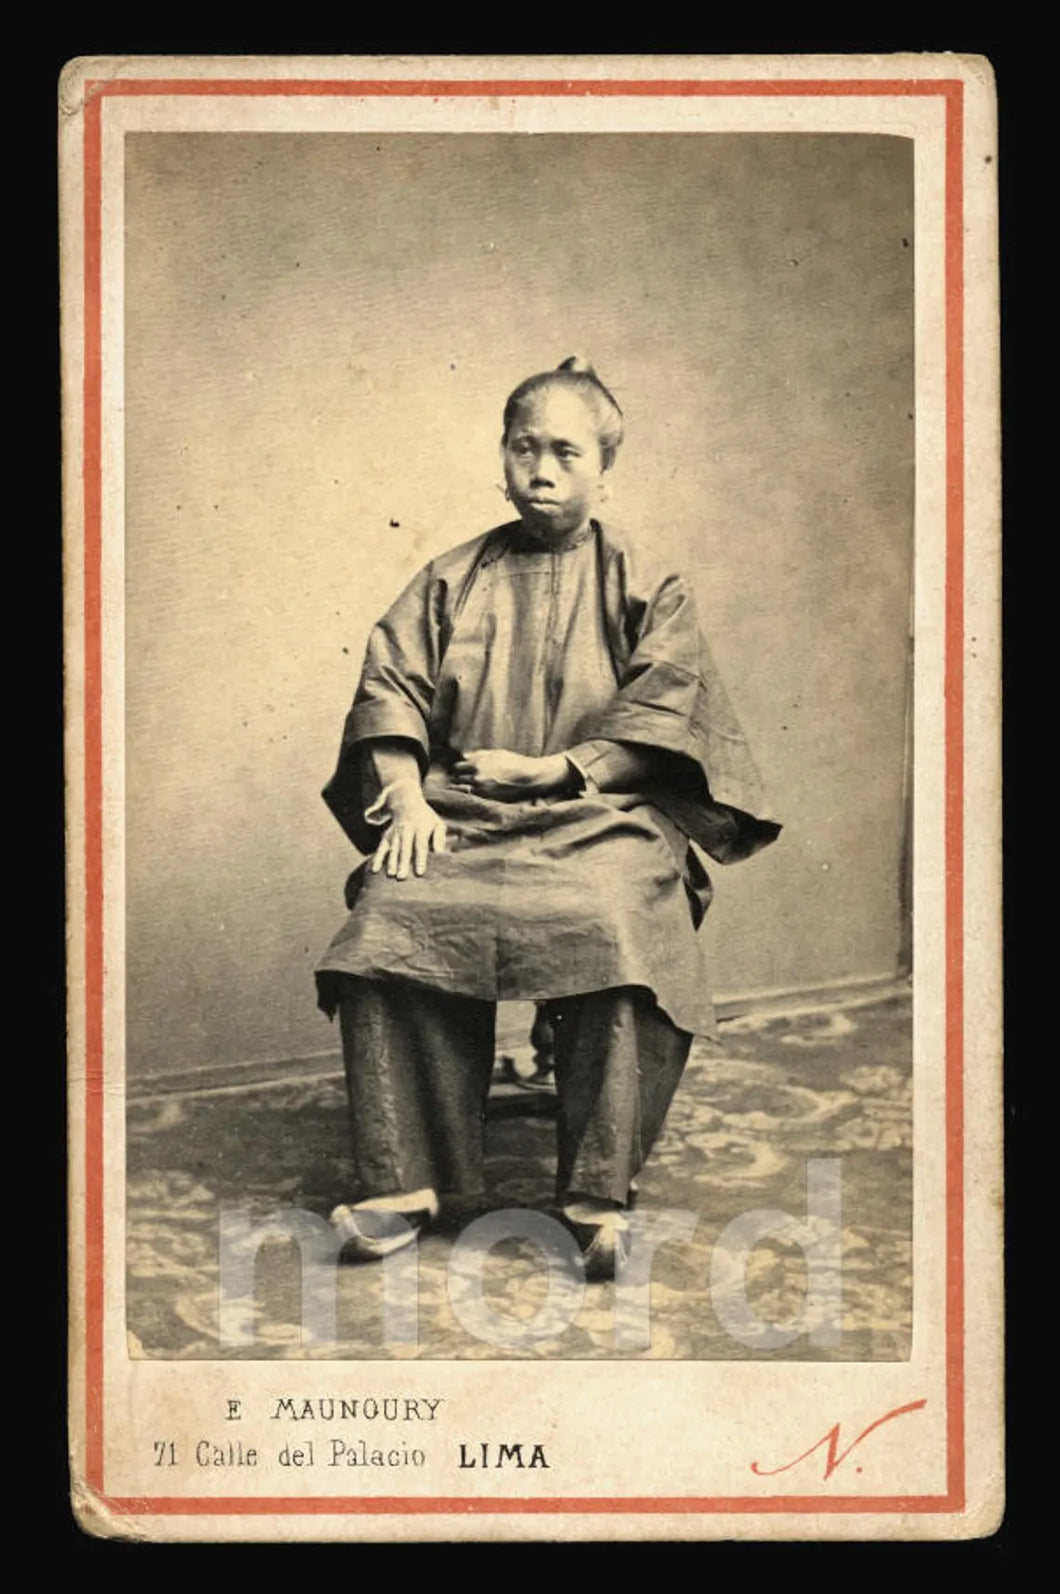 RARE 1860s CDV Photo - Chinese Woman in Lima PERU - Bound Feet?